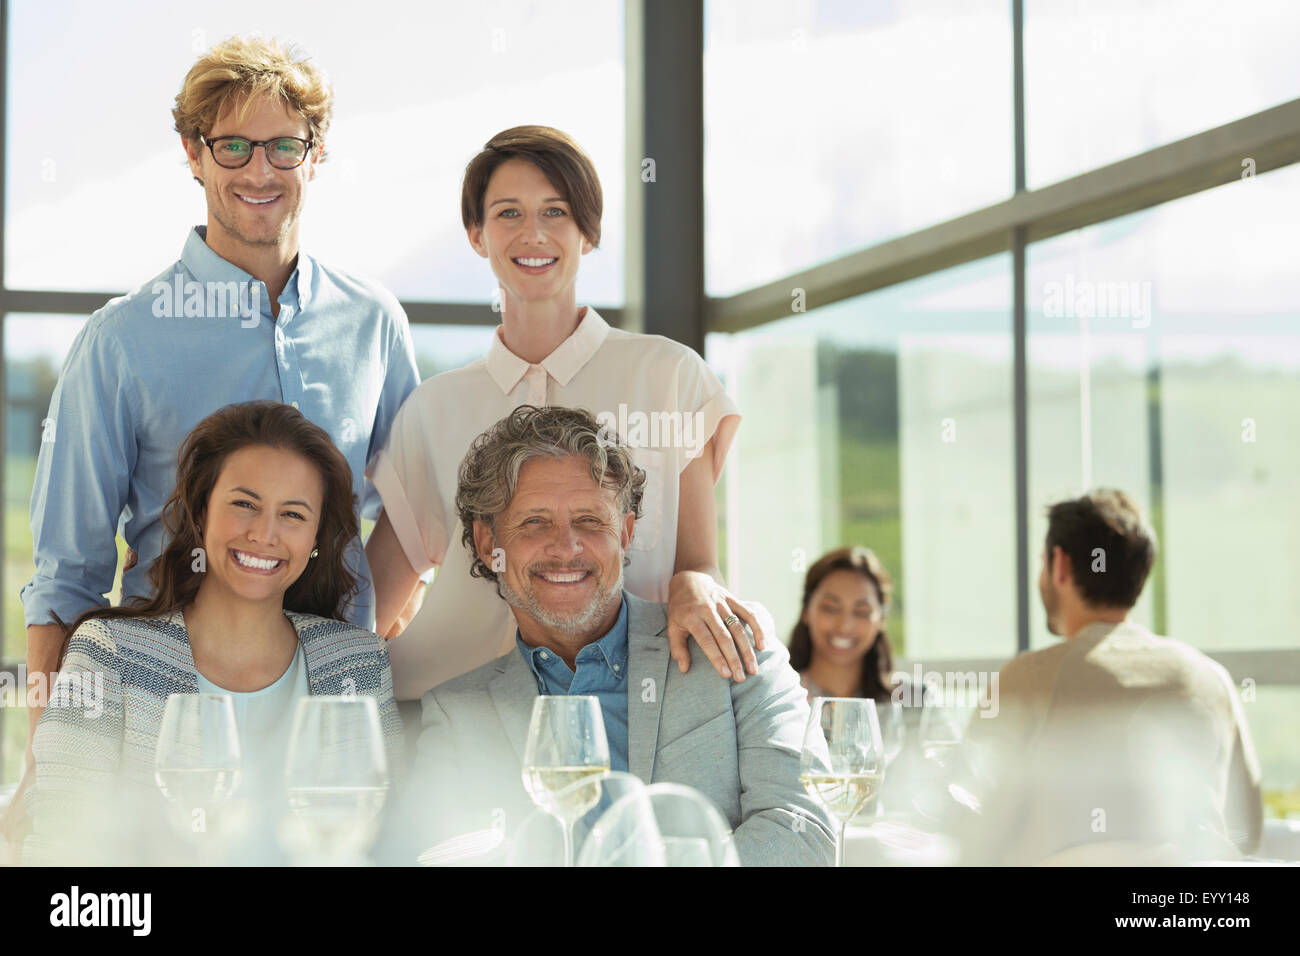 Portrait smiling friends in sunny restaurant Stock Photo